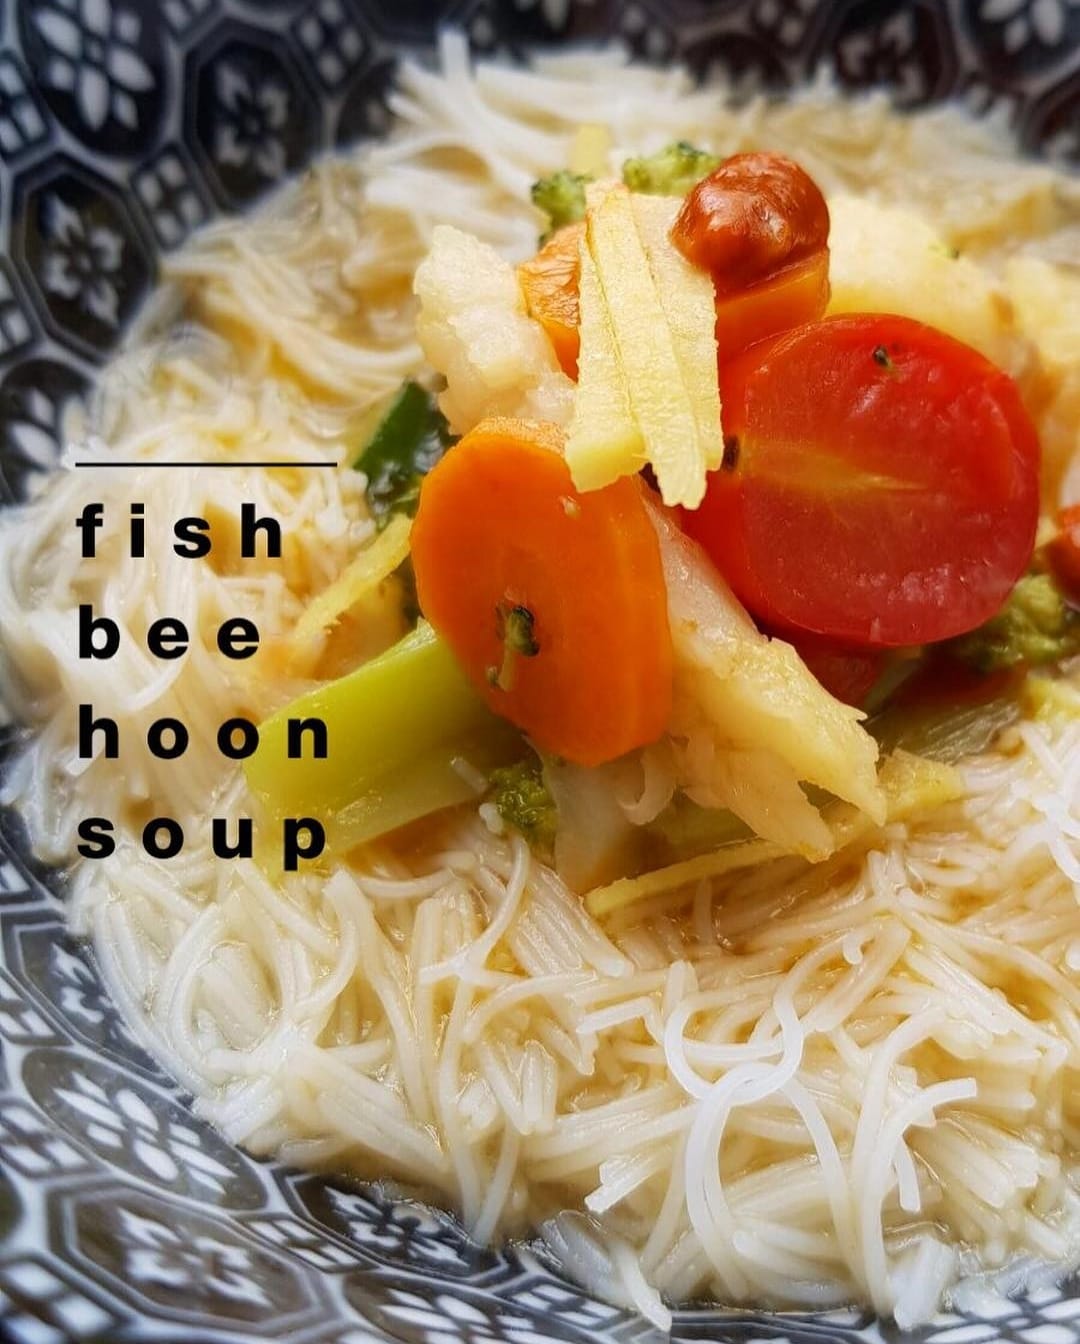 Fish vermicelli soup 🐟🍜